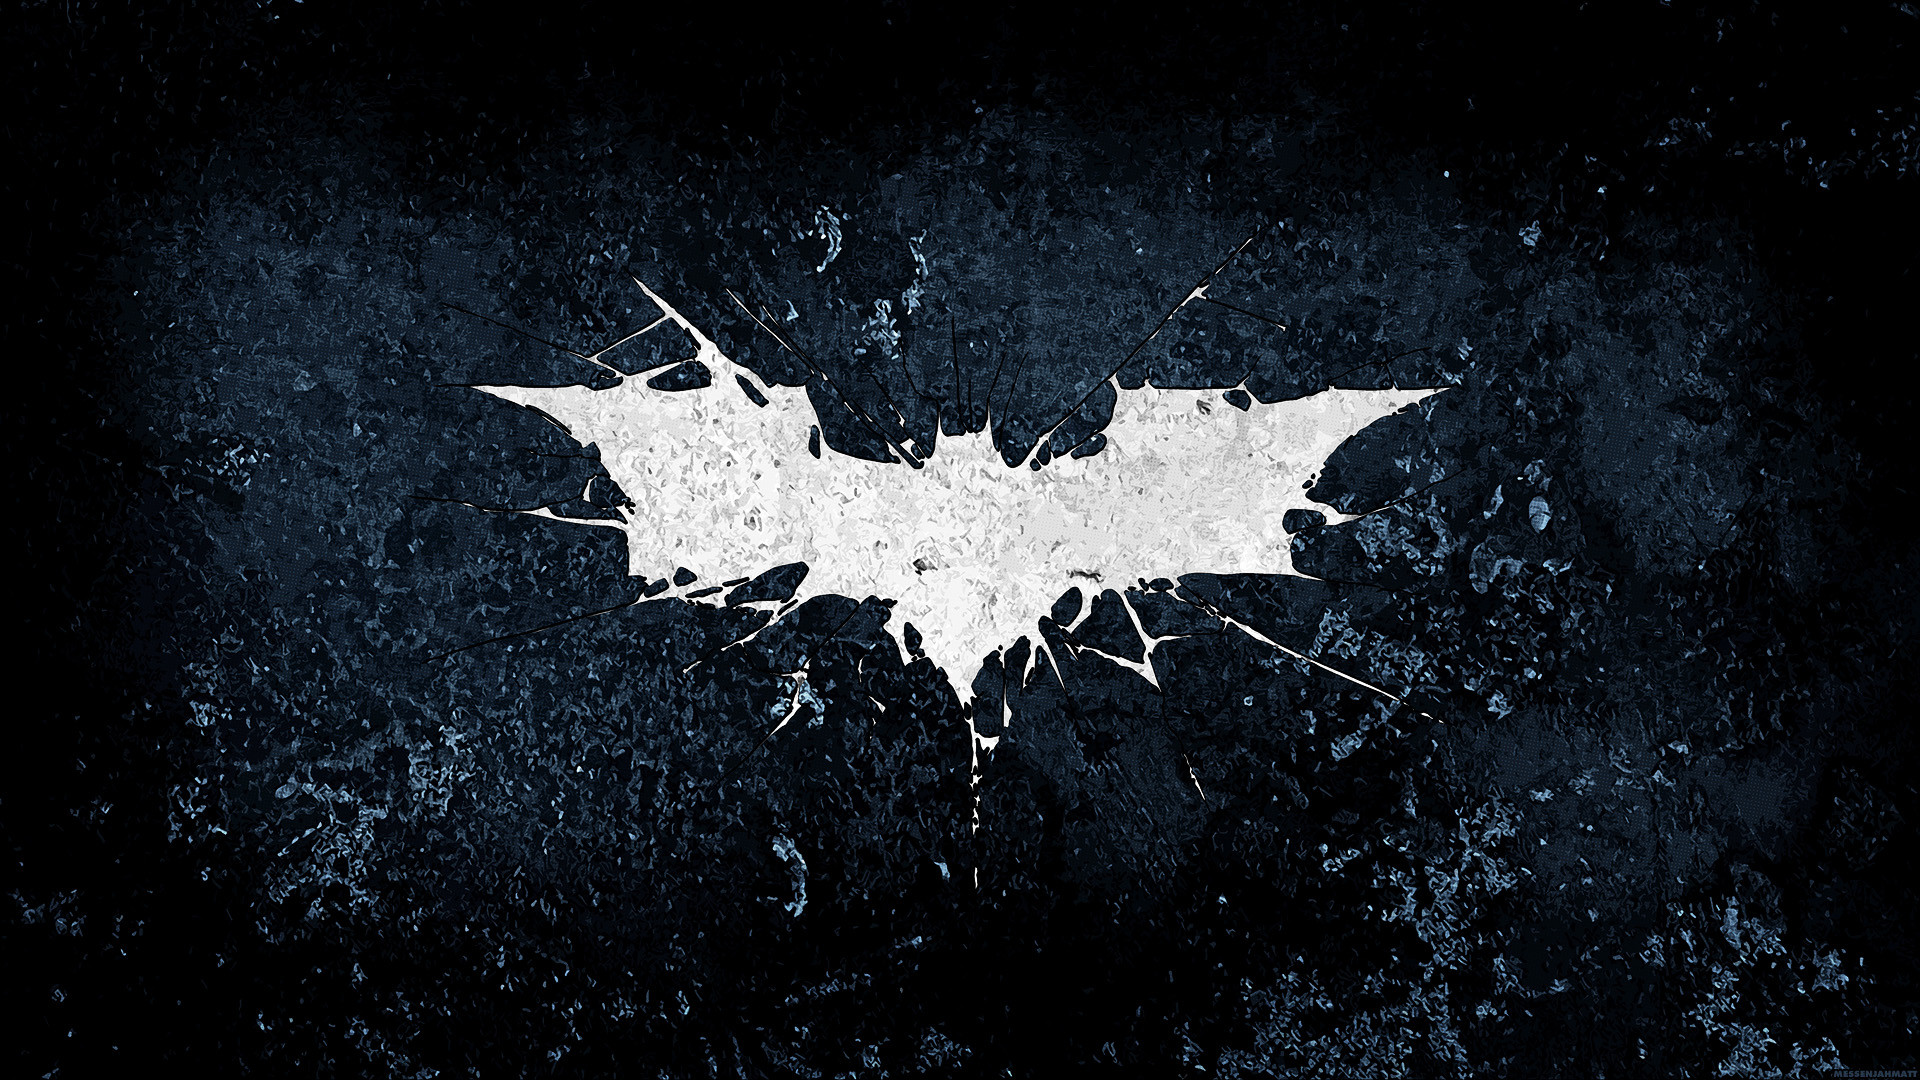 The Dark Knight Rises Wallpapers HD. Image Source the dark knight rises hd wallpapers desktop backgrounds latest 2012 batman symbol wallpapers